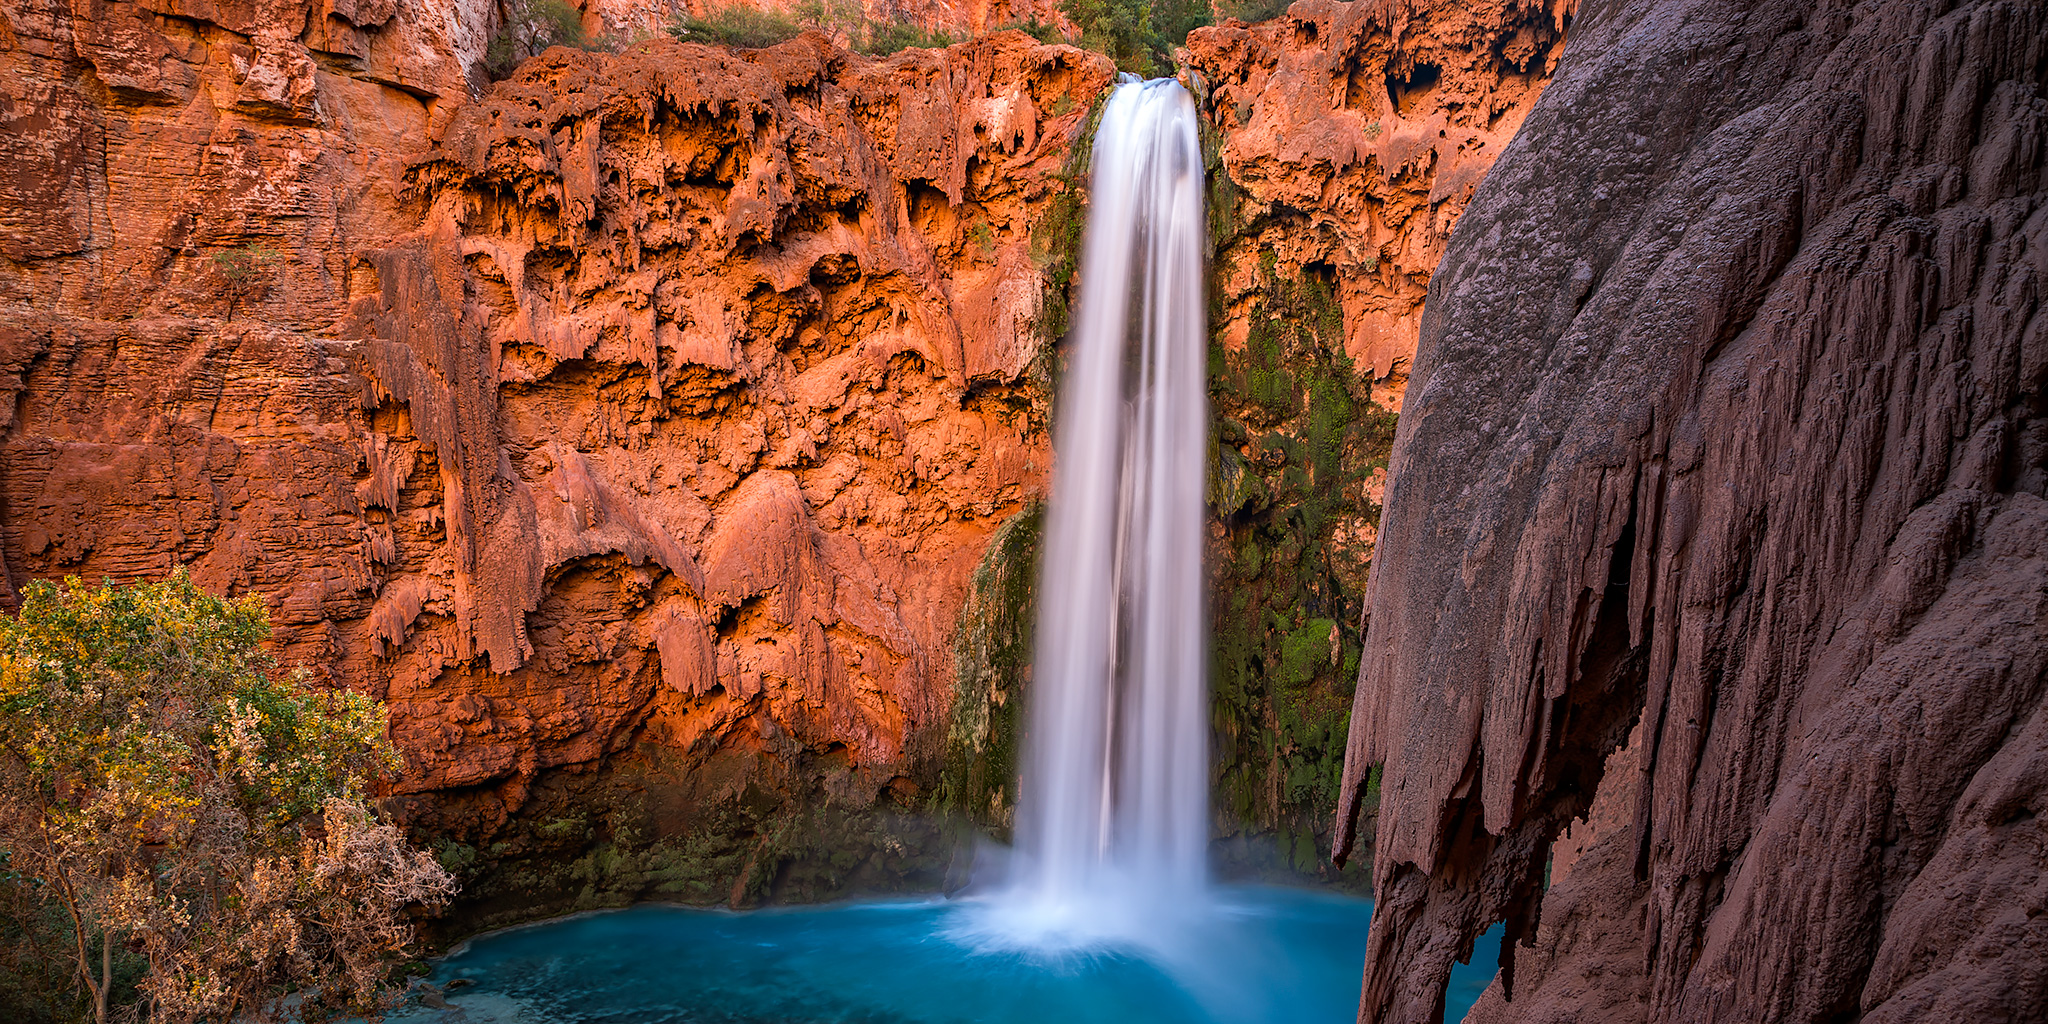 Thousand Below: The Waterfalls of Havasu Canyon